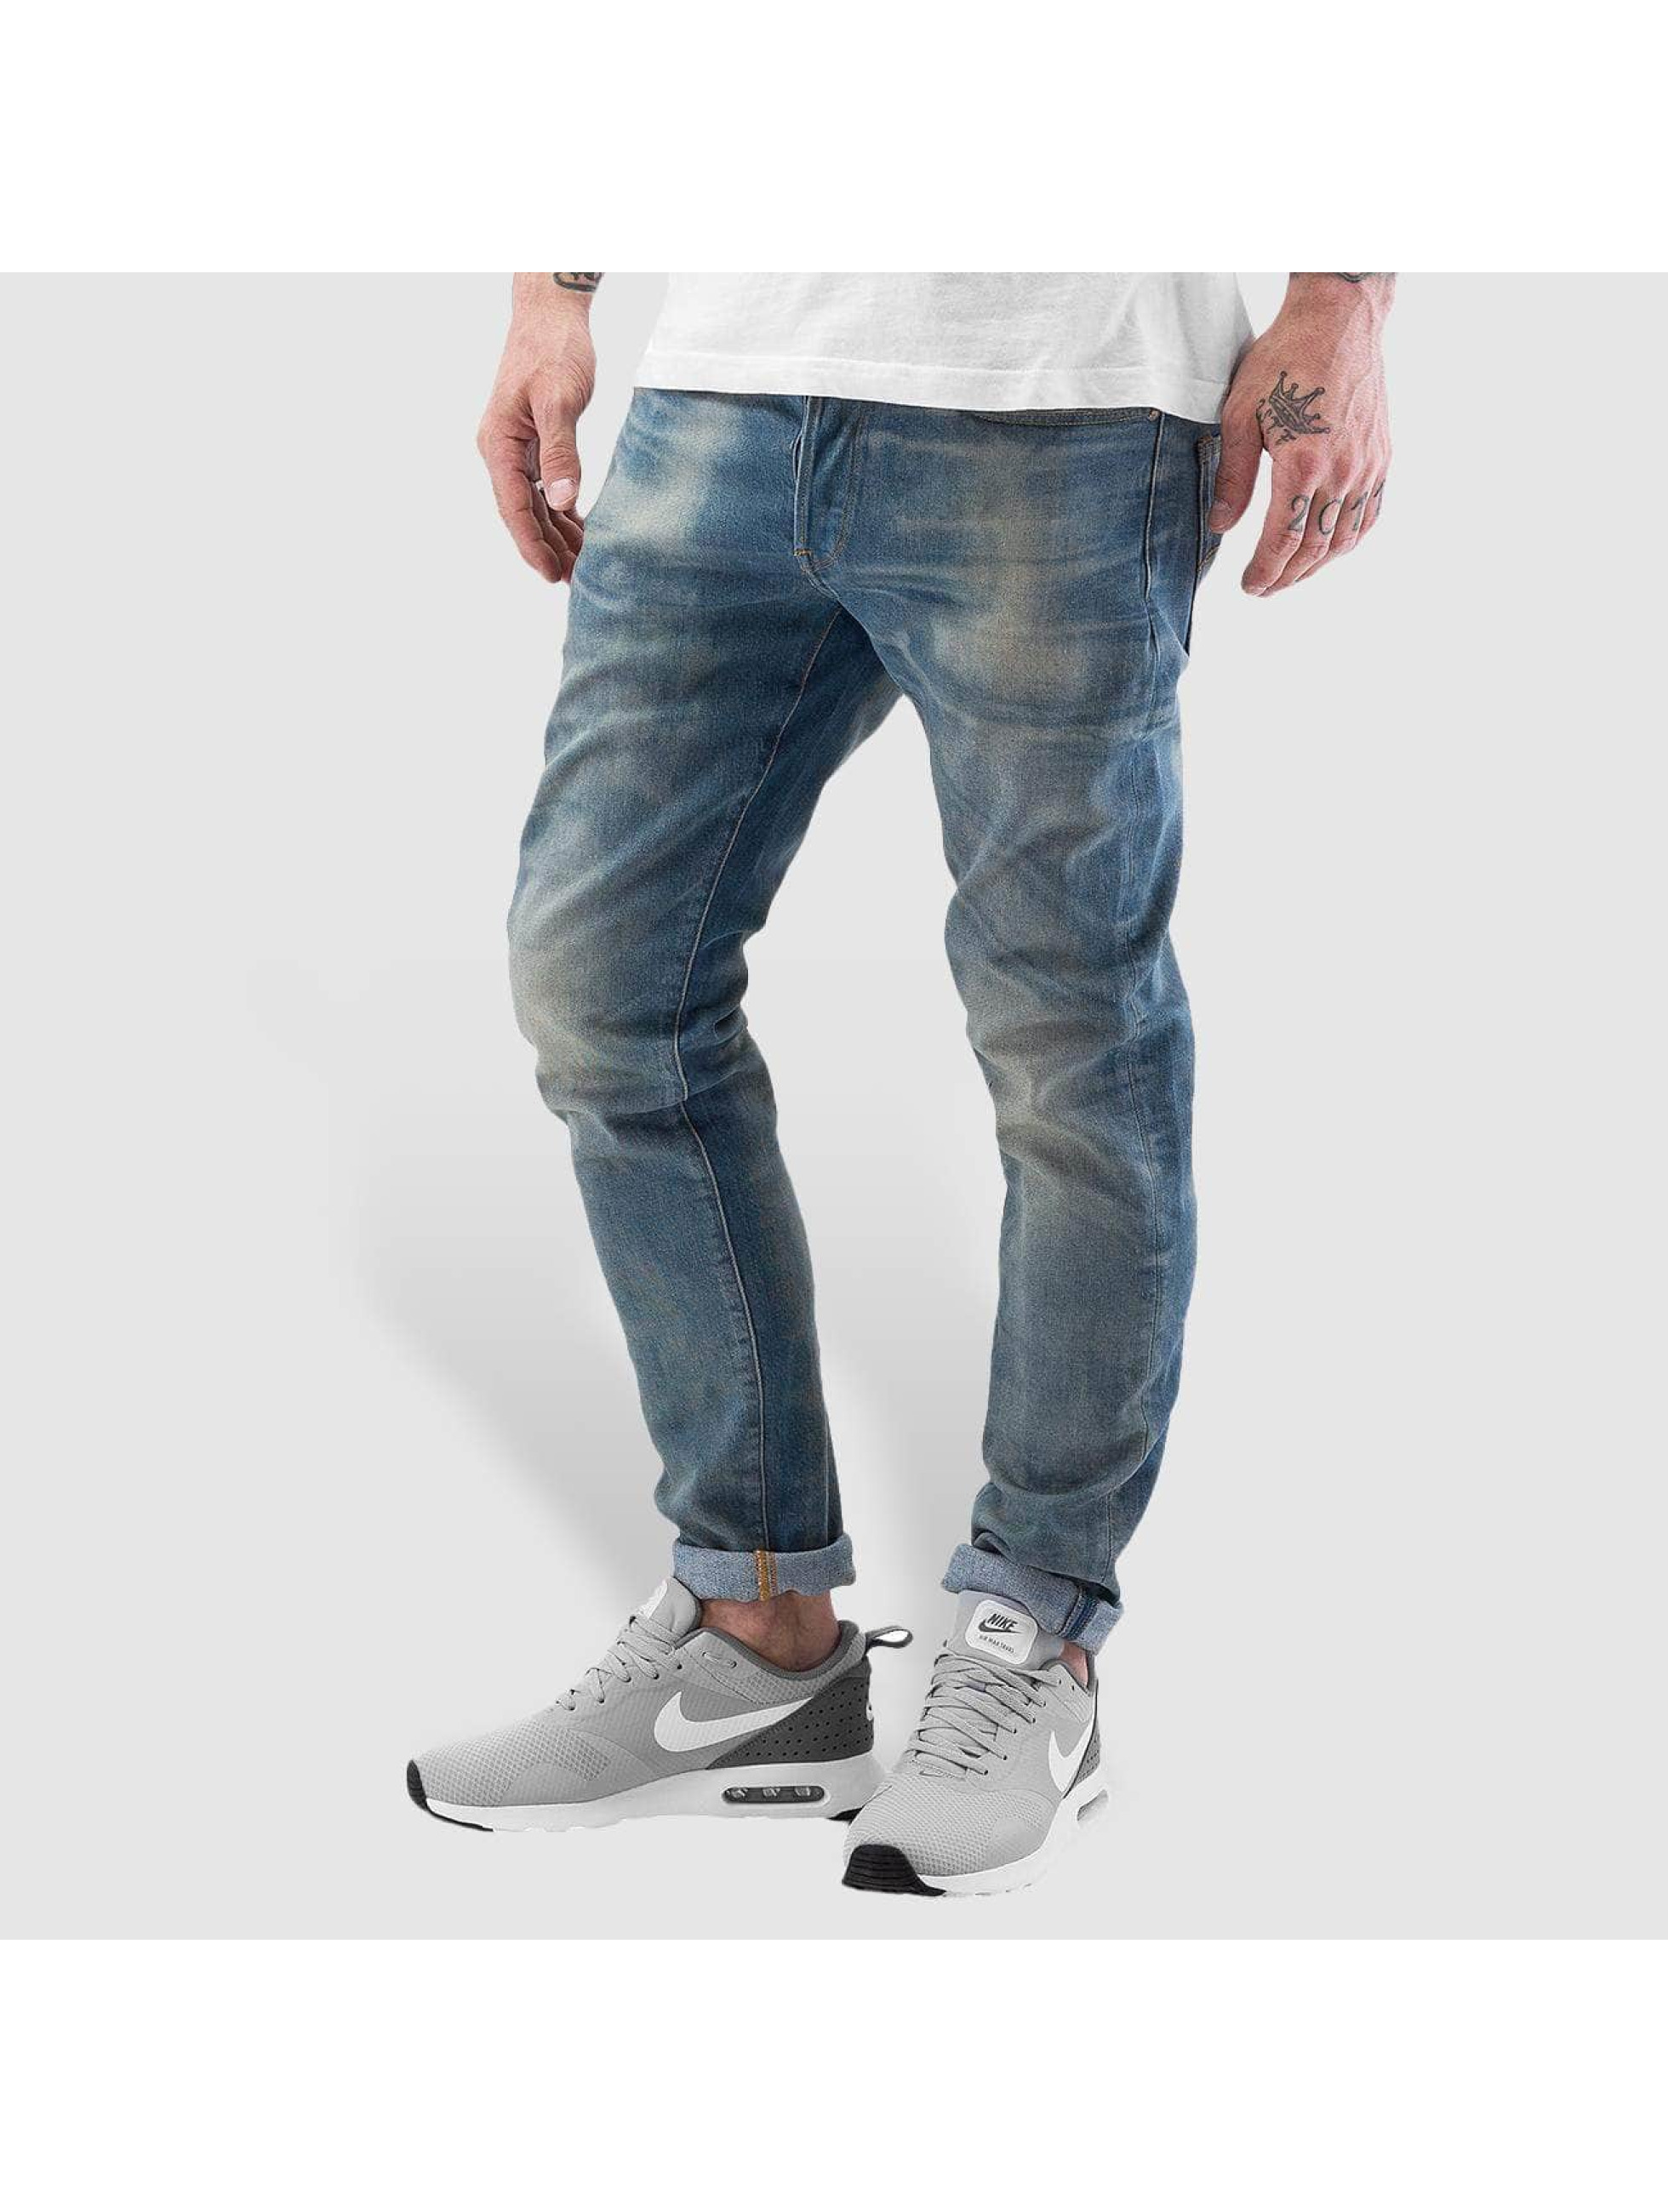 G-Star Jeans / Skinny jeans 3301 in blauw